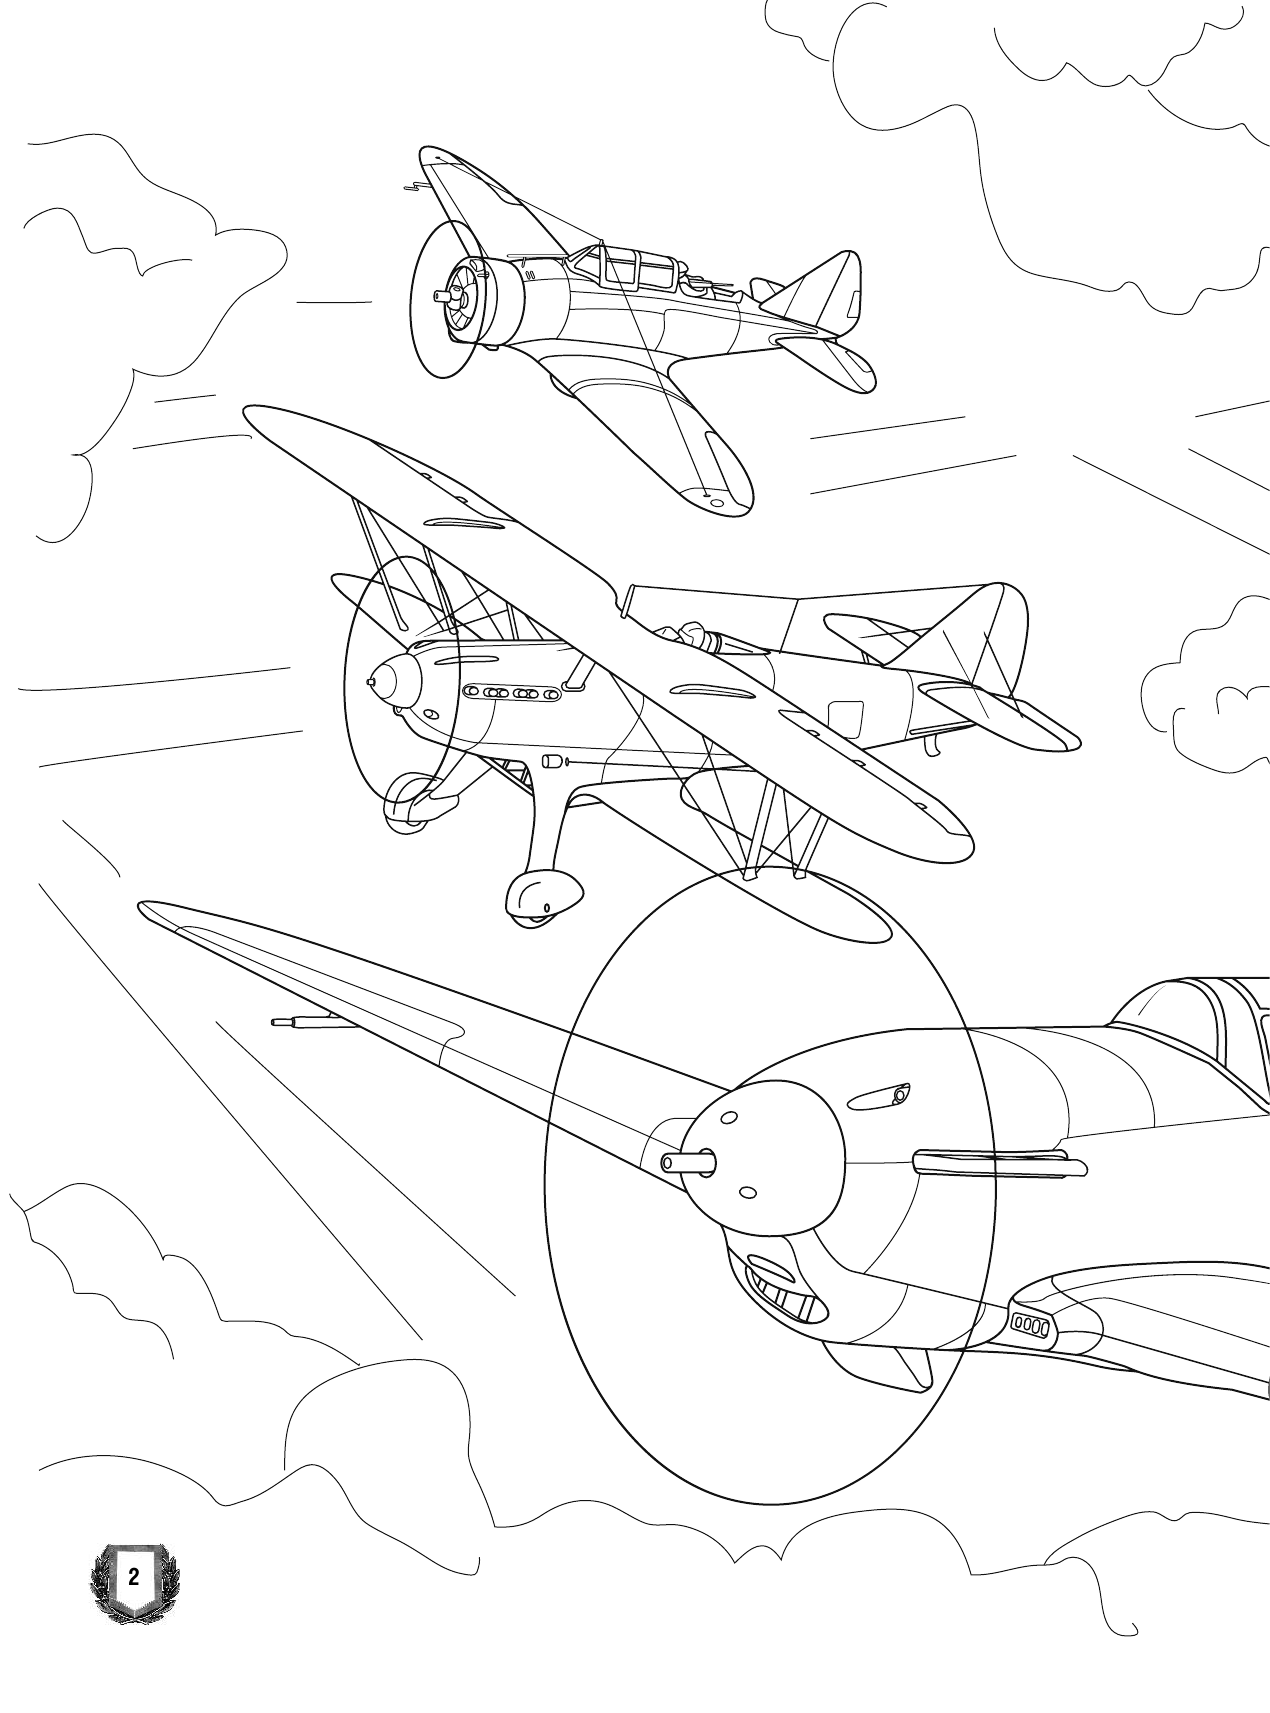  World of Warplanes. Раскраска. Военные самолёты - страница 3